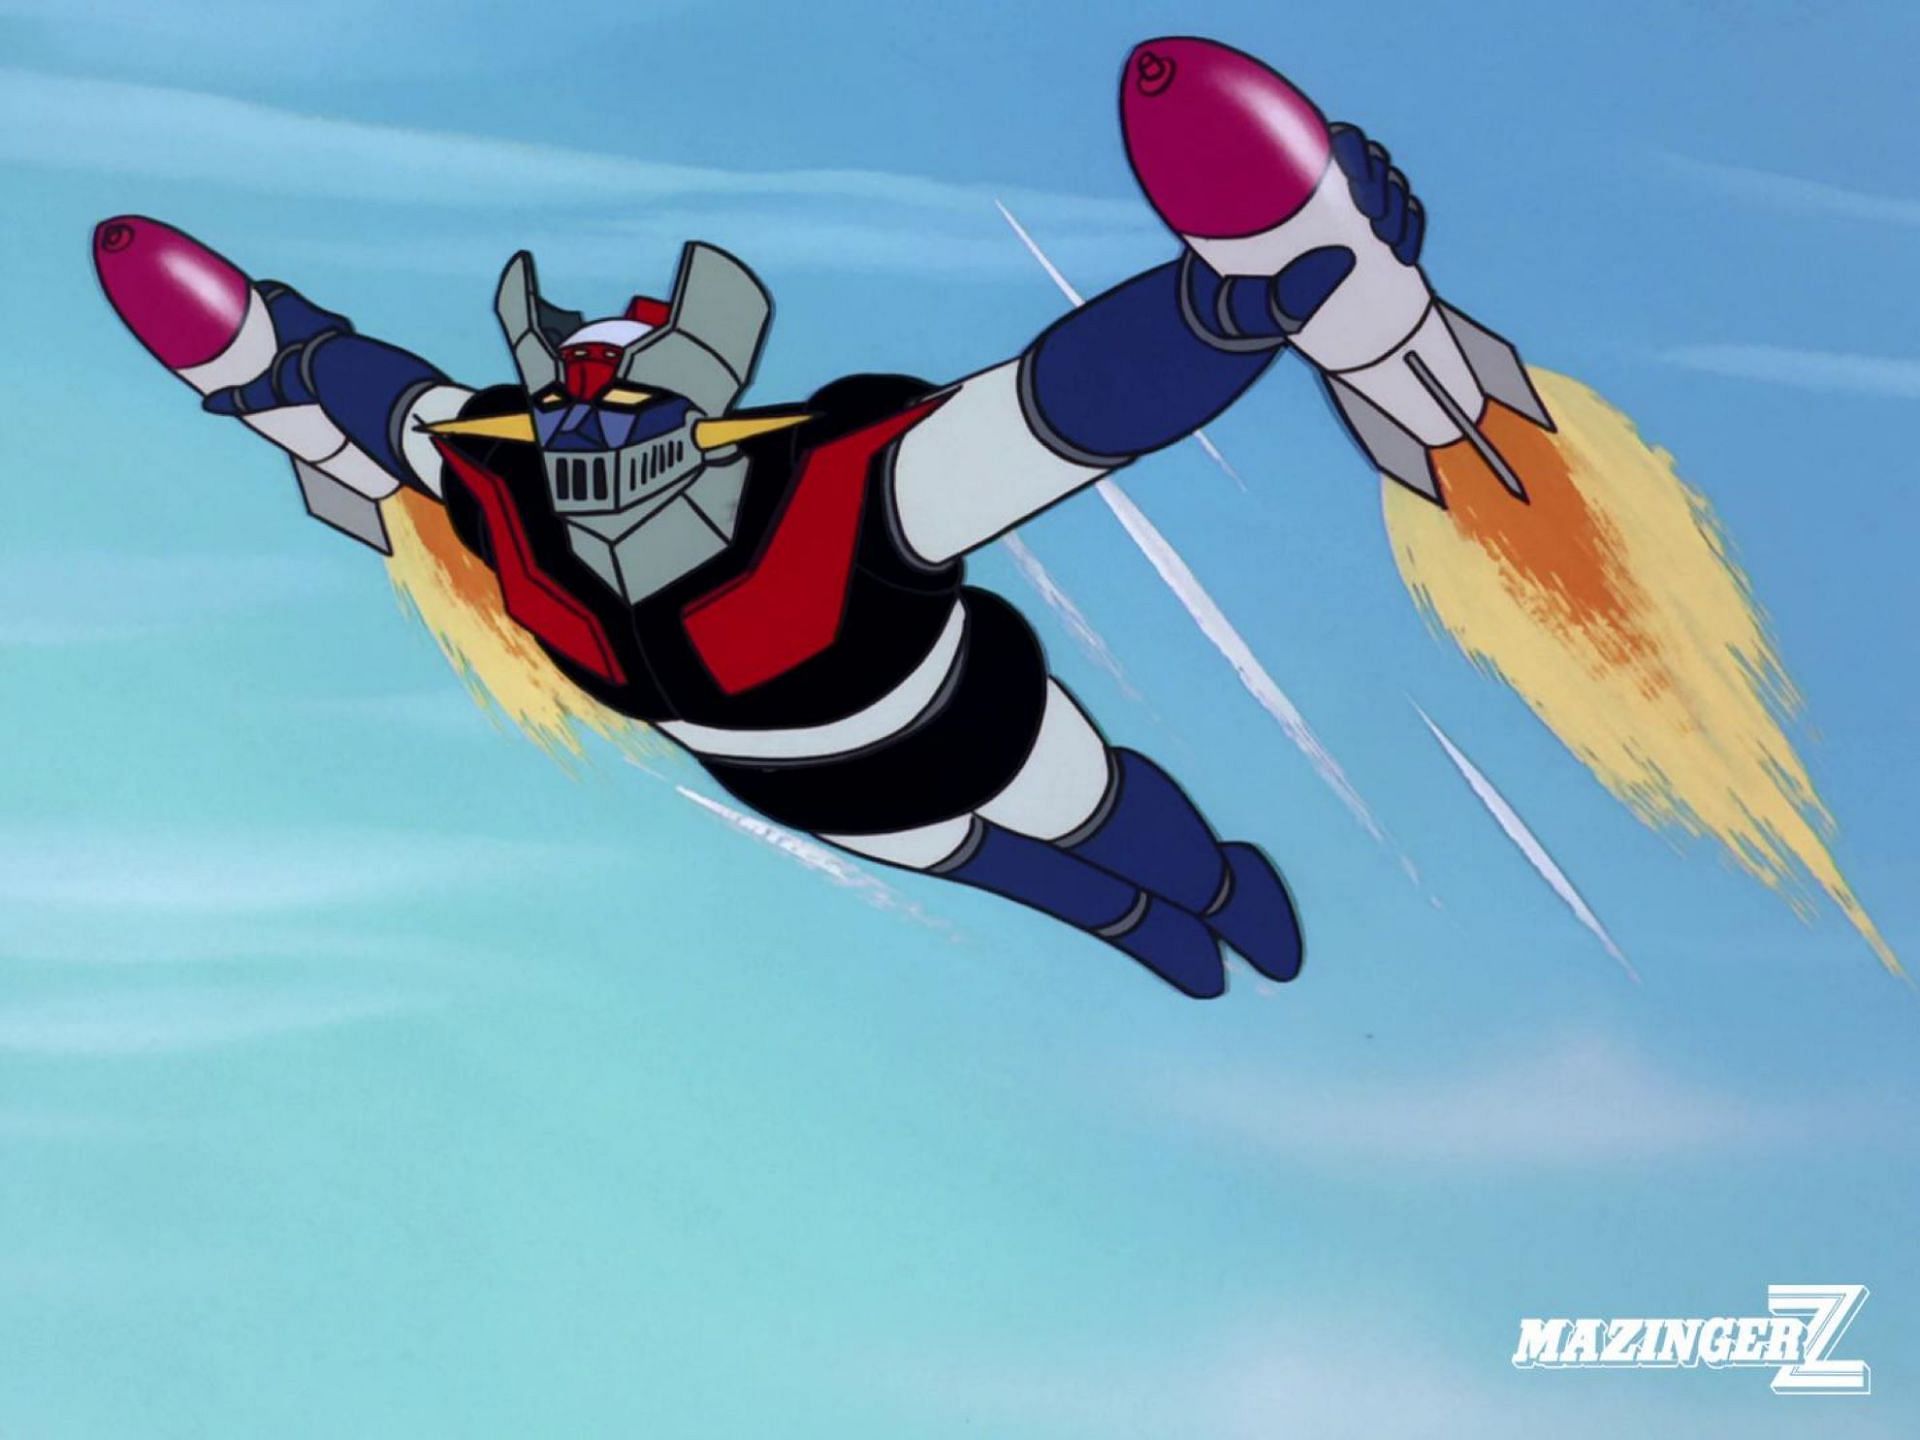 Mazinger Z in flight (Image via Toei Animation)